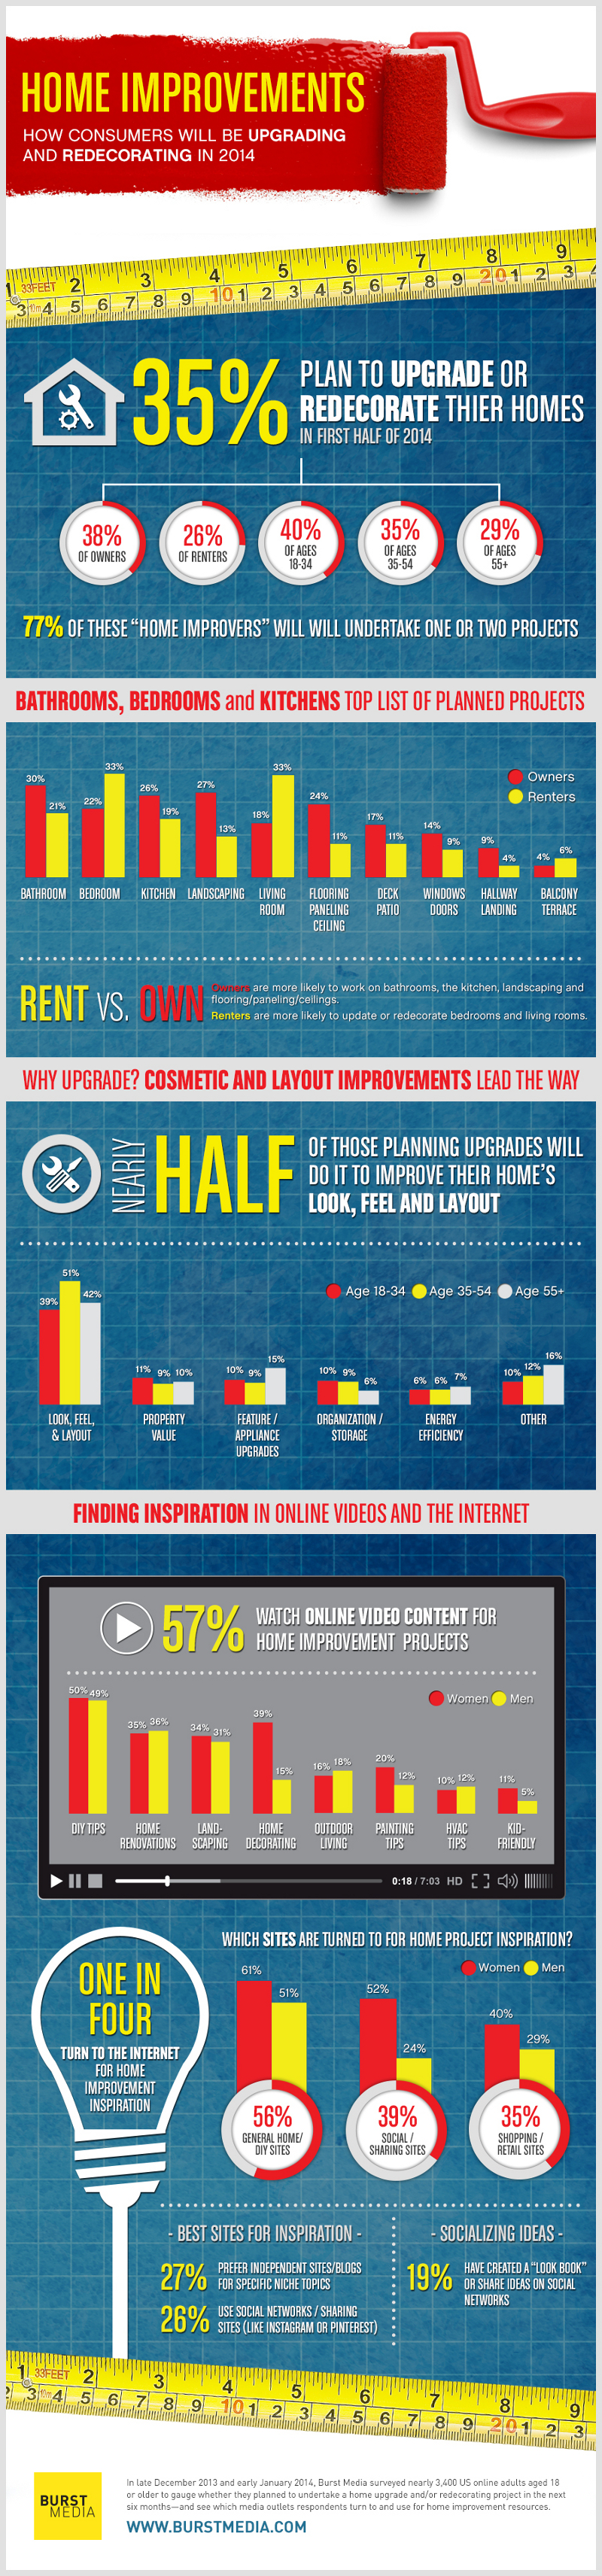 Home Improvement Industry Statistics